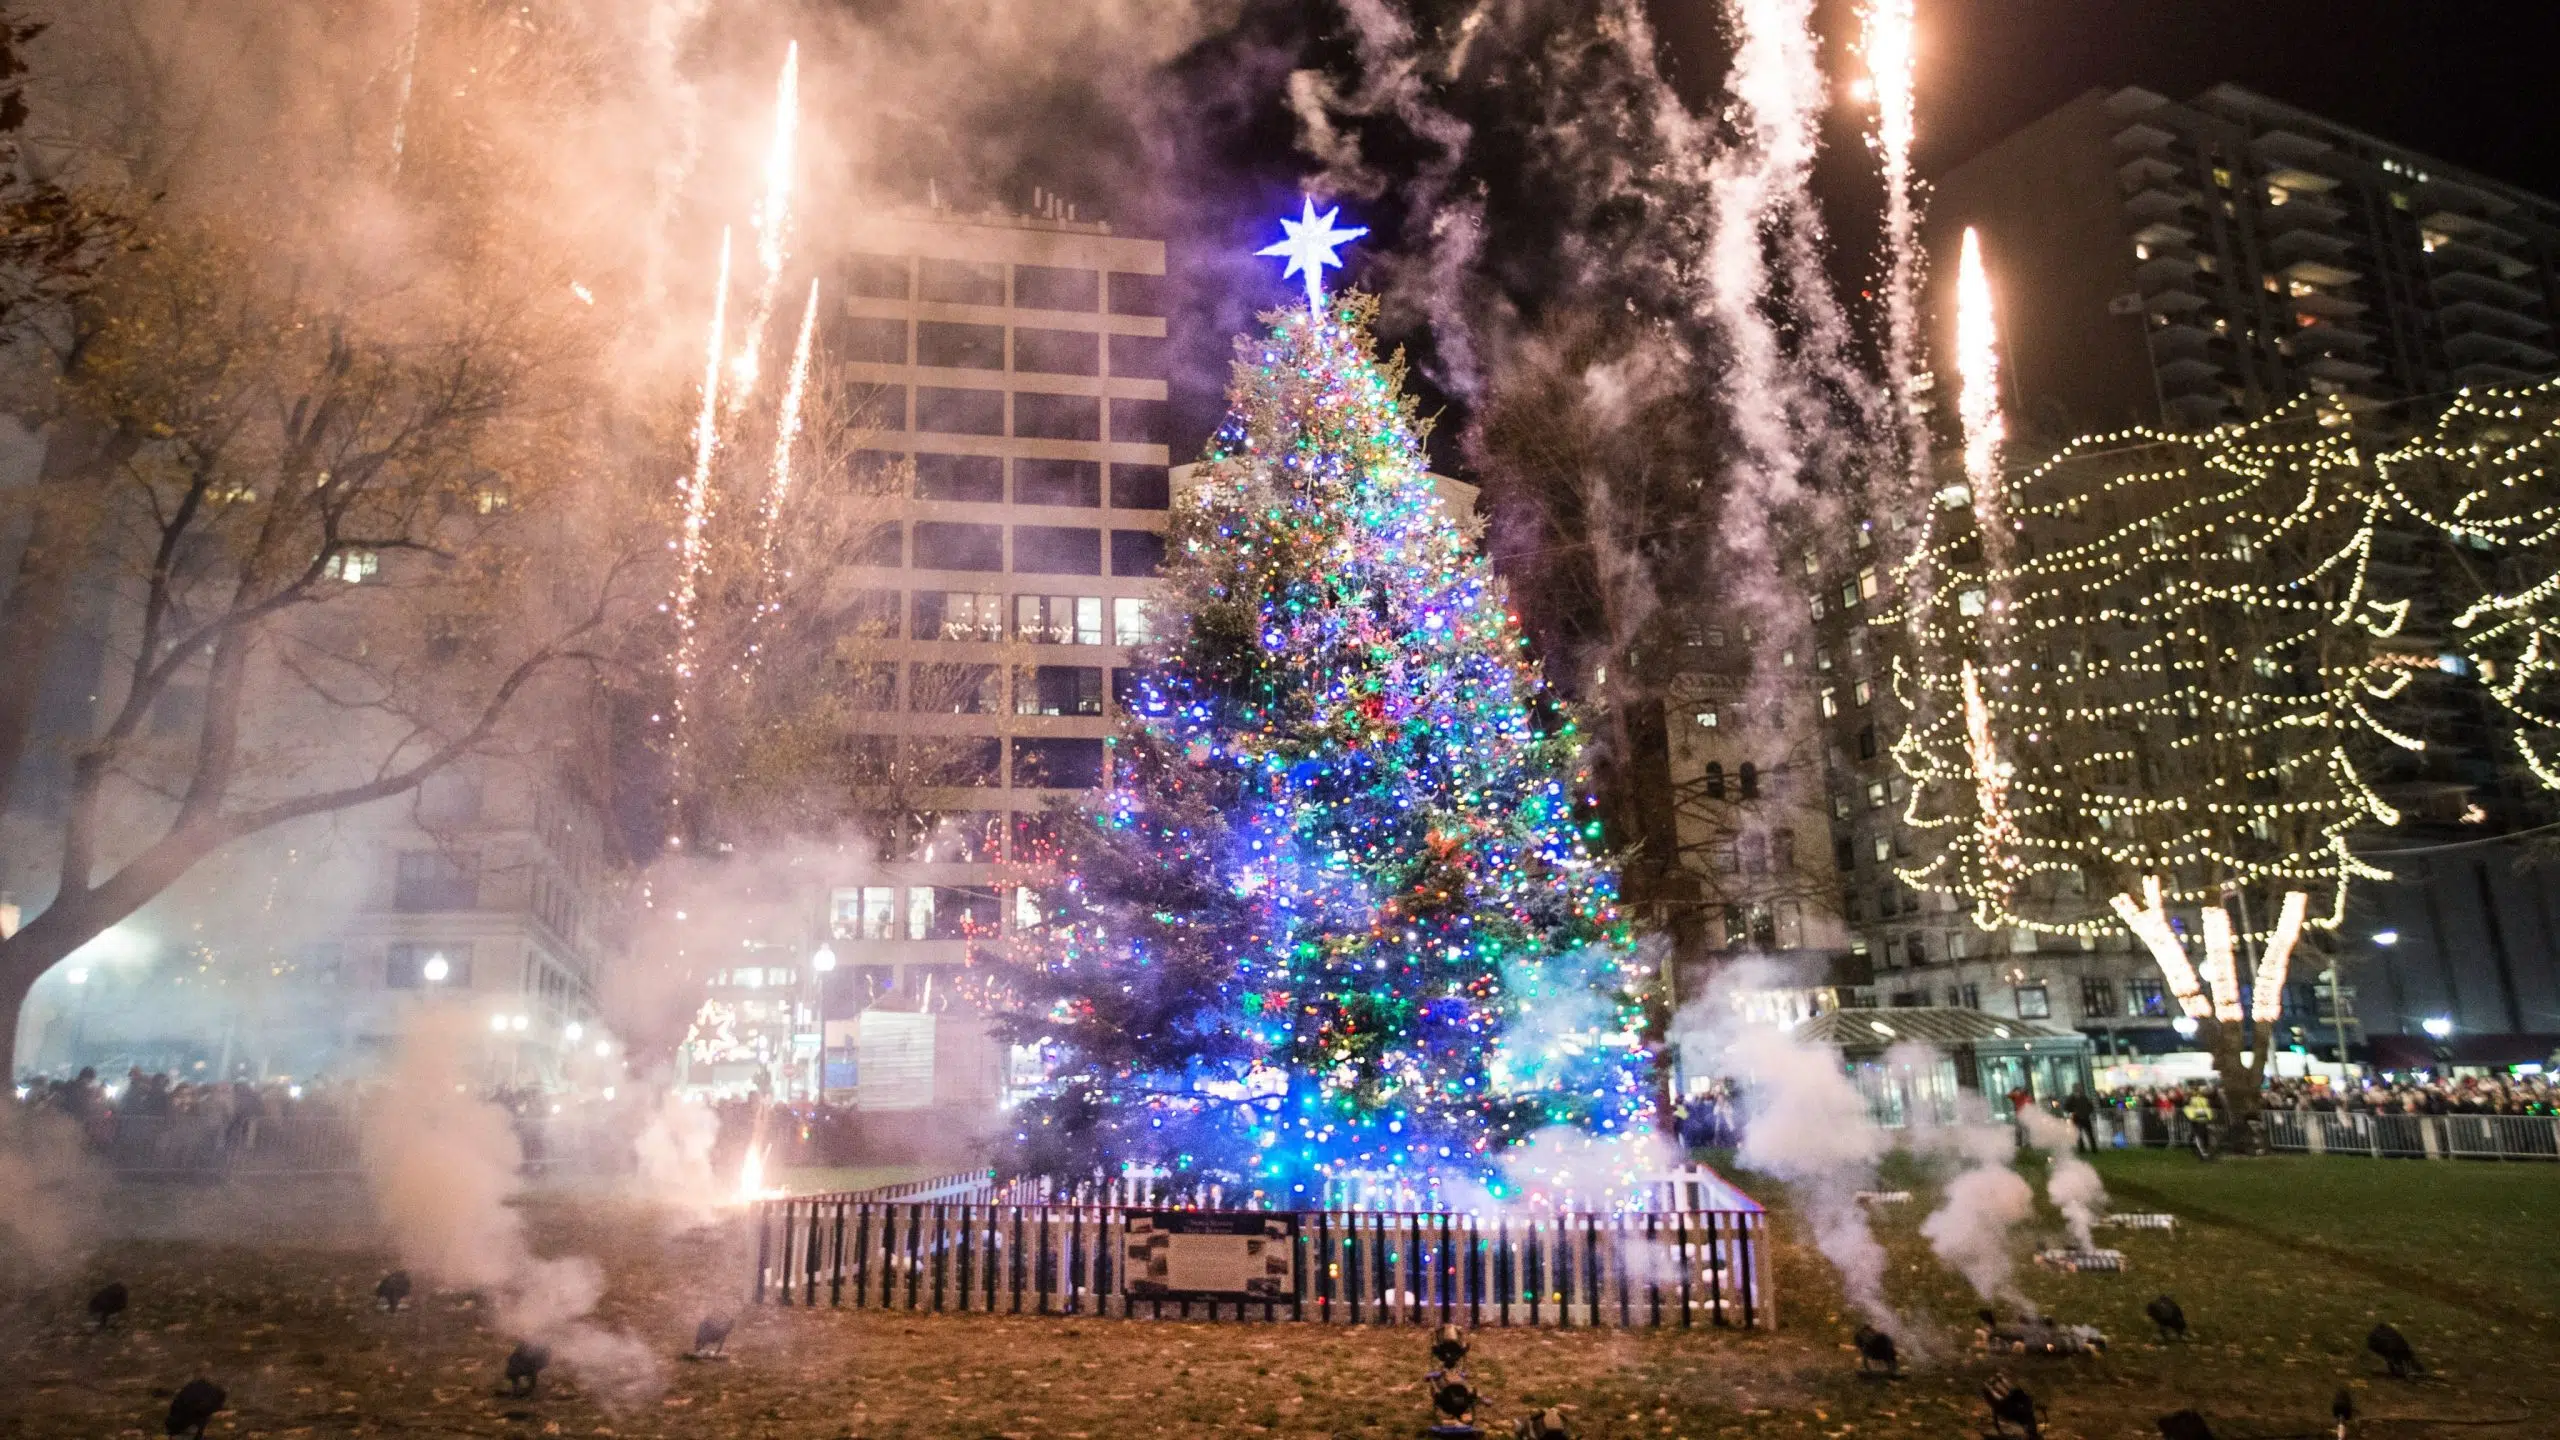 VIDEO: Deck the halls, Nova Scotia's annual Christmas tree gift a Boston 'superstar'